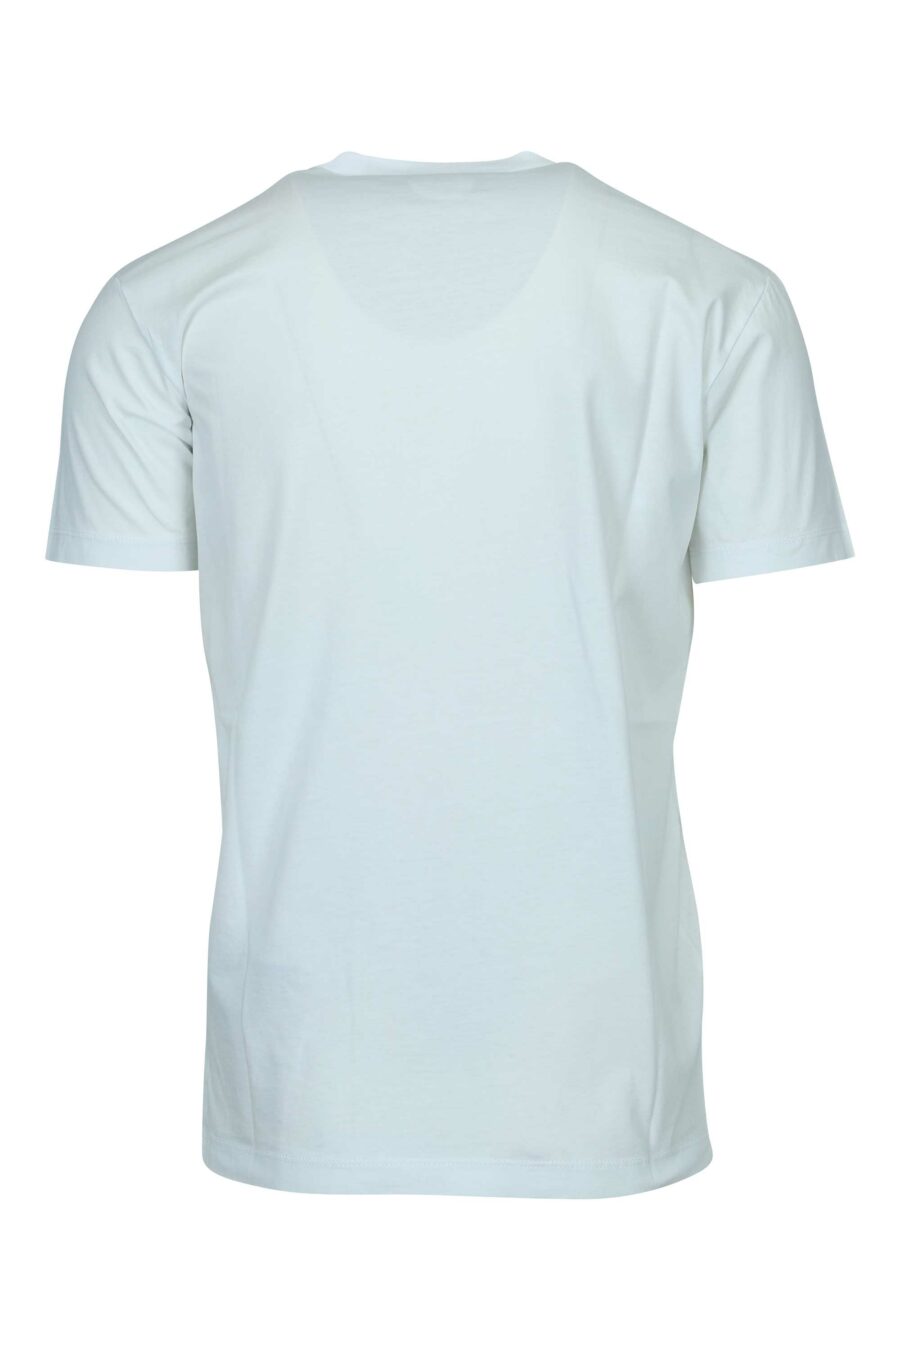 Camiseta blanca con maxilogo multicolor retro - 8054148447434 1 2